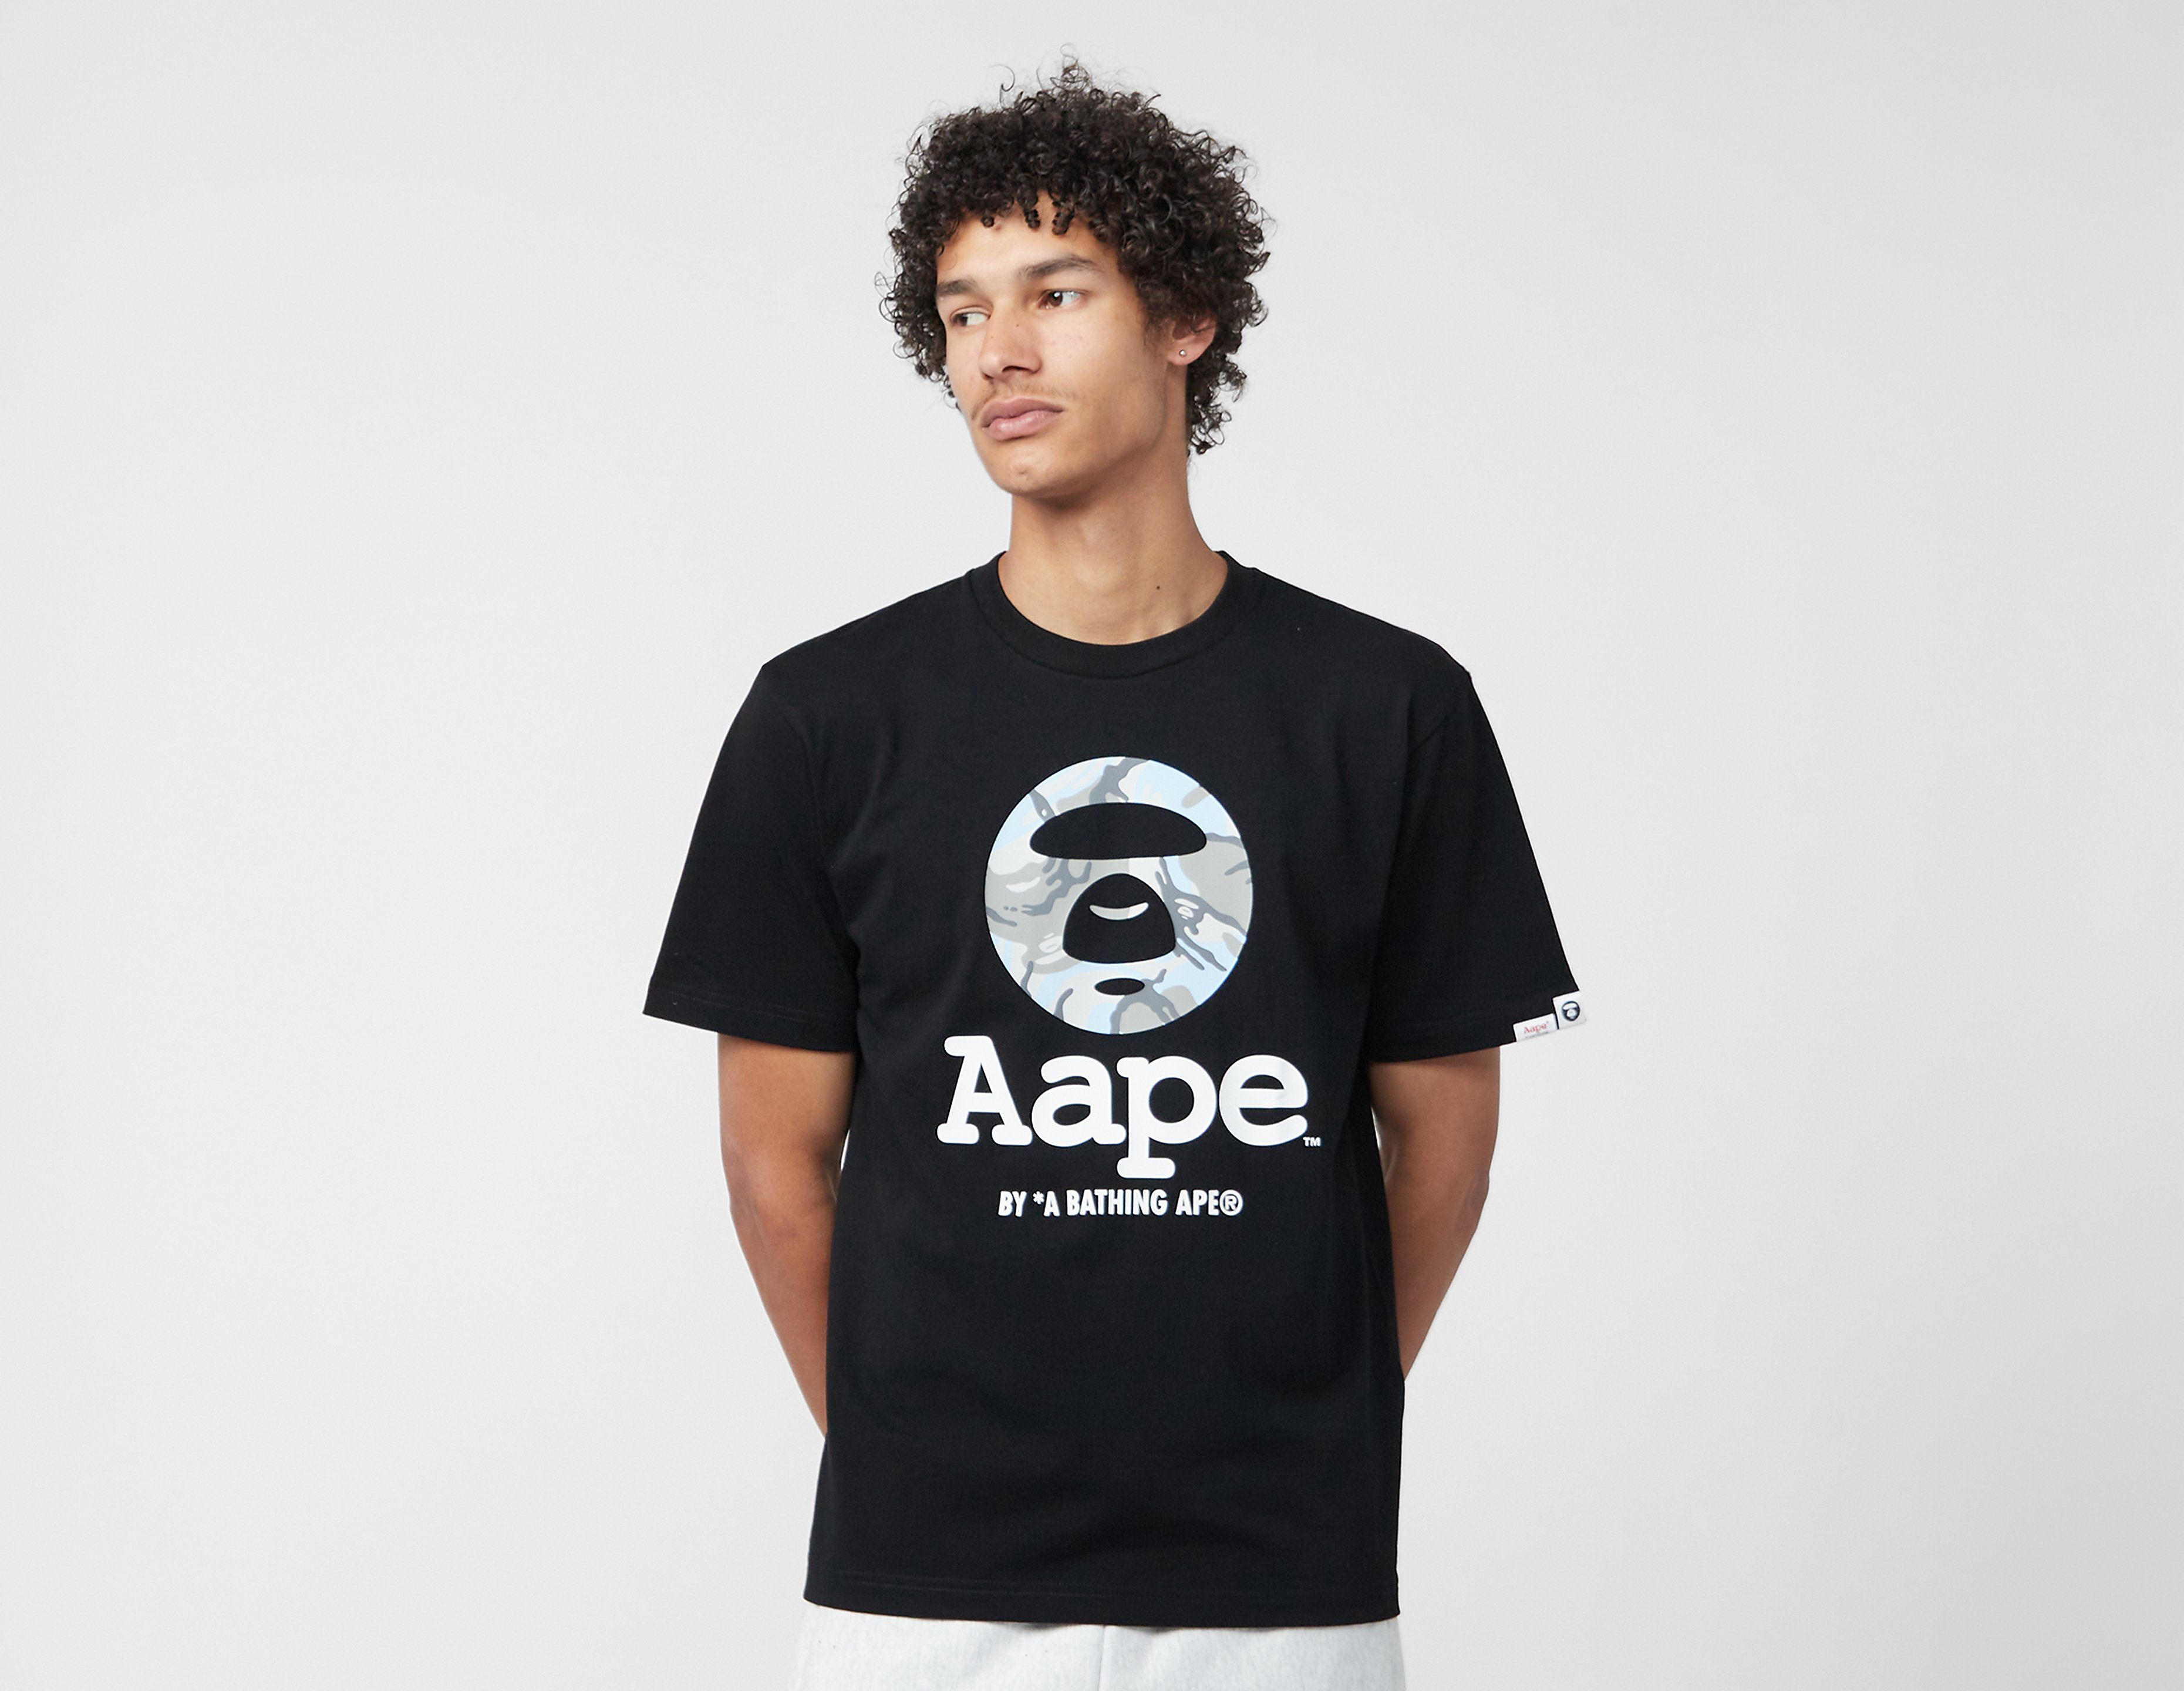 AAPE By A Bathing Ape Basic T-Shirt, Black